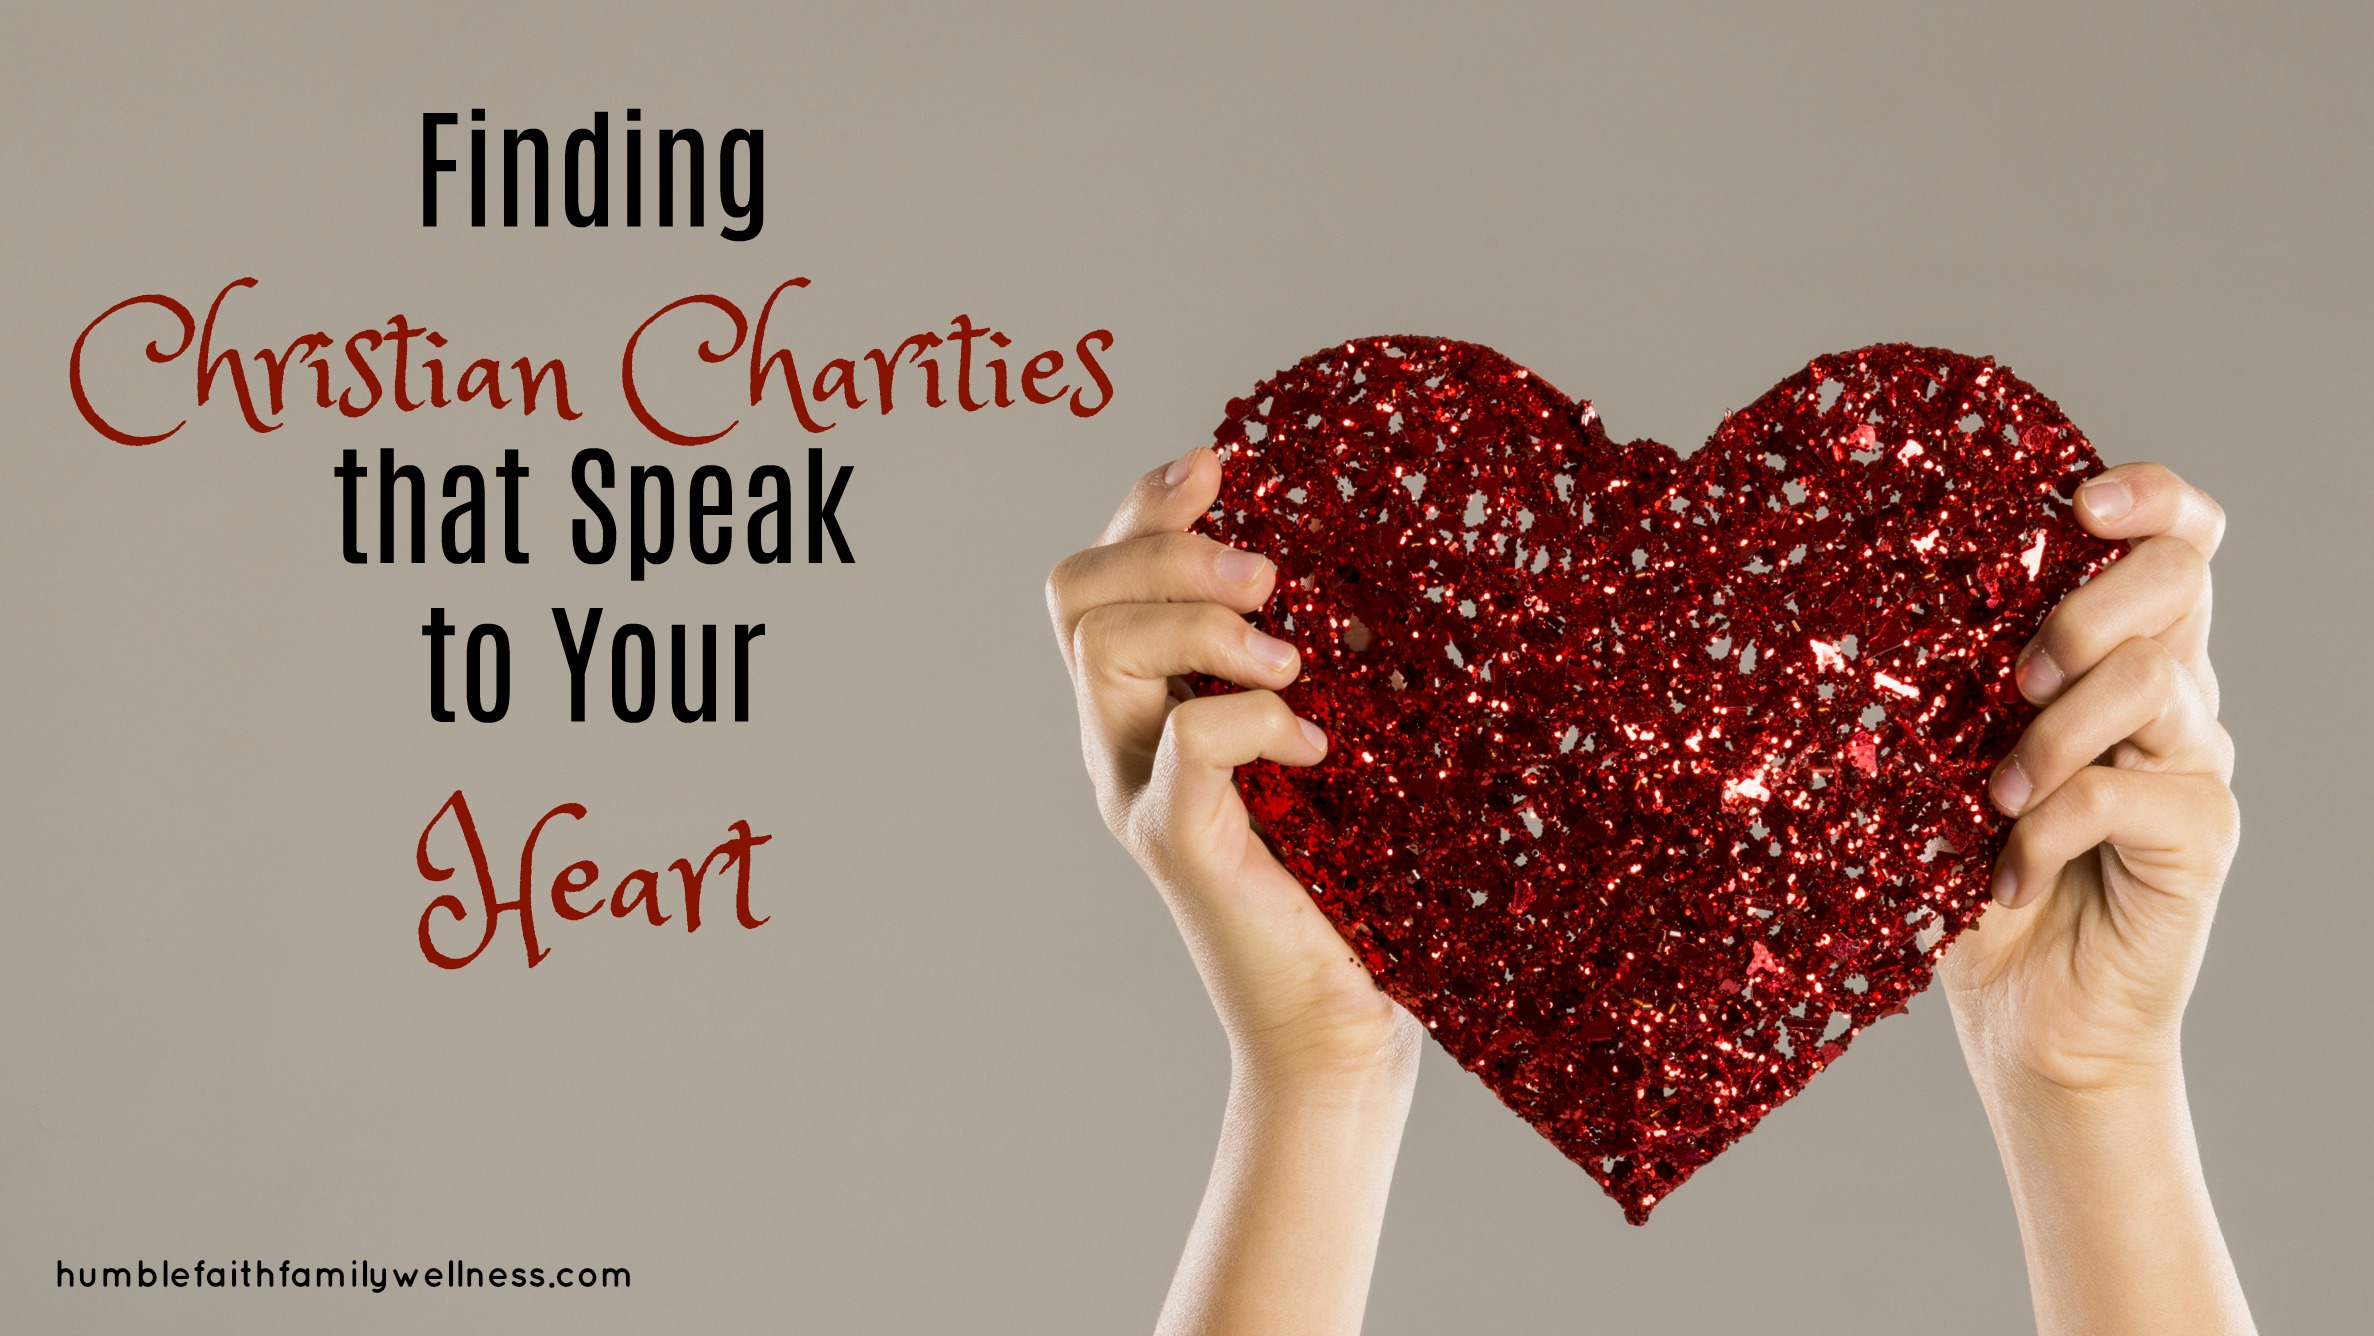 Charities, Christian Charities, Giving